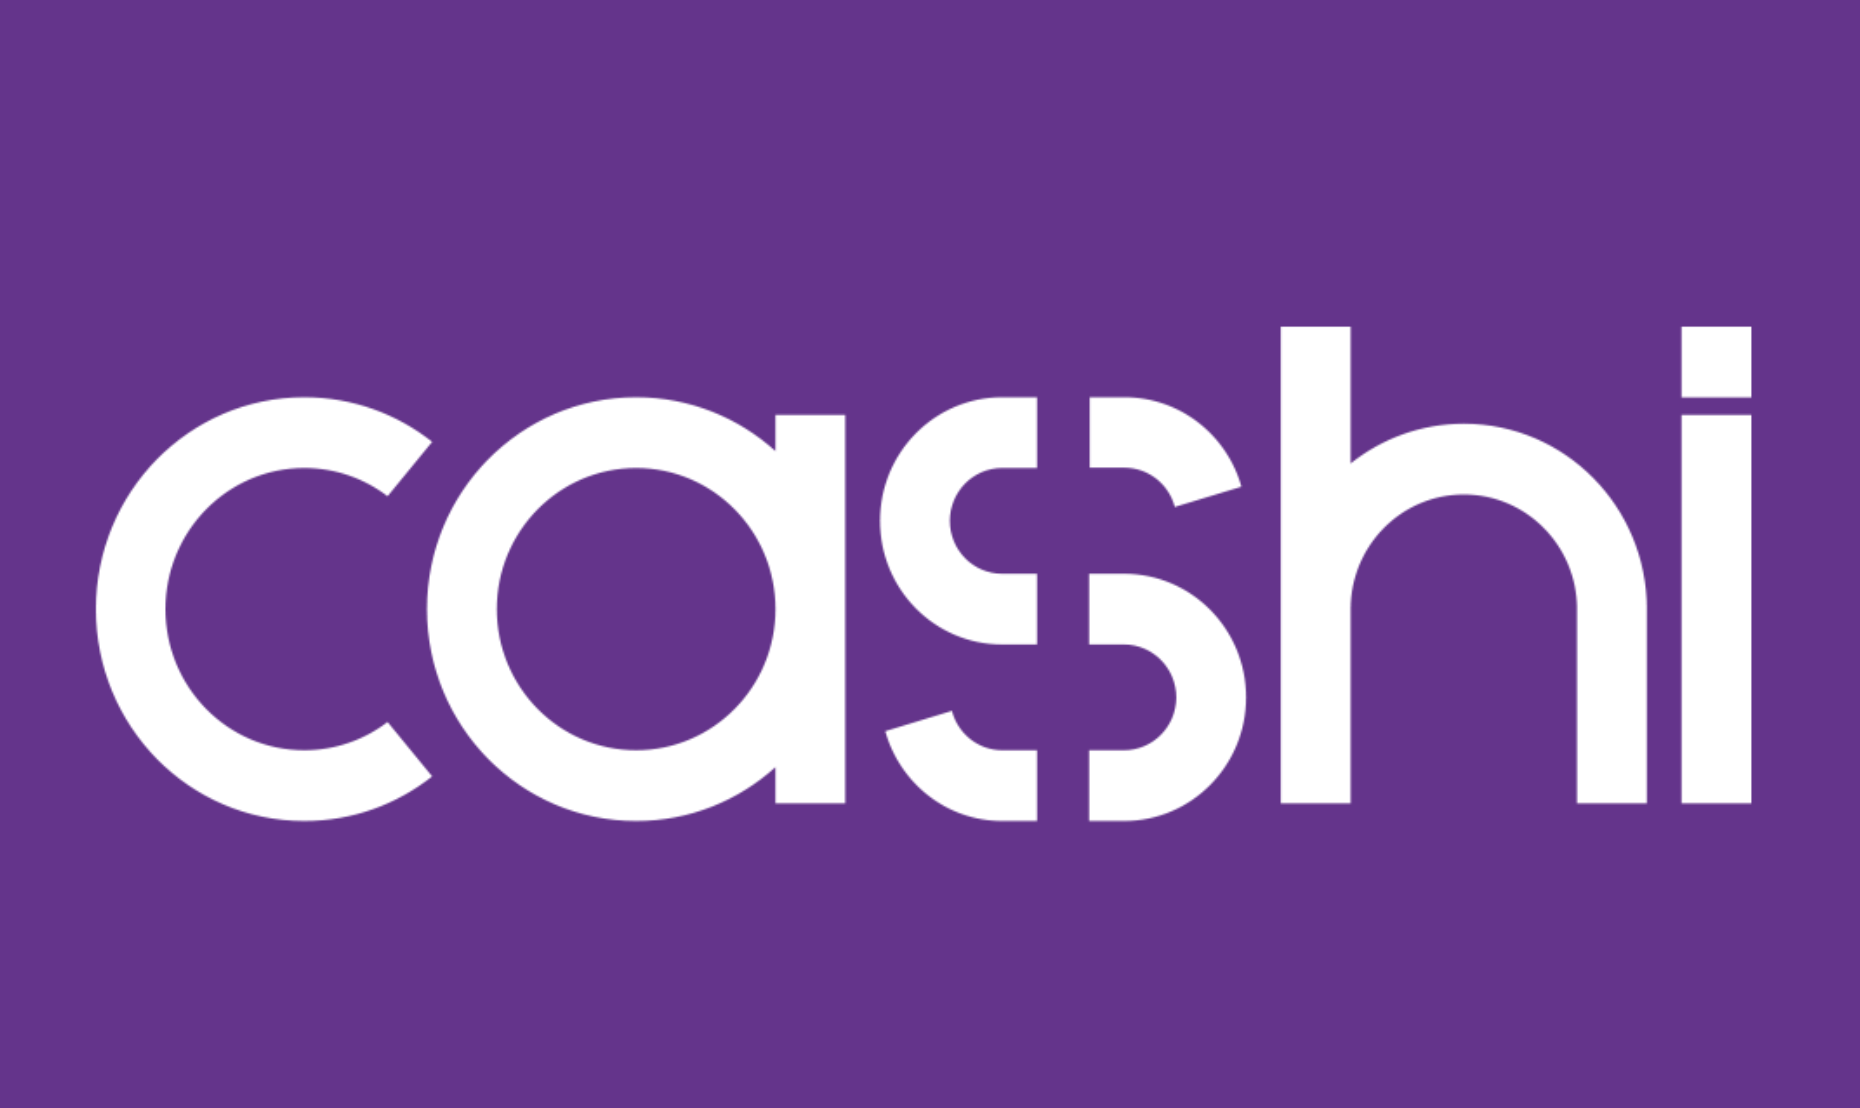 cashi logo